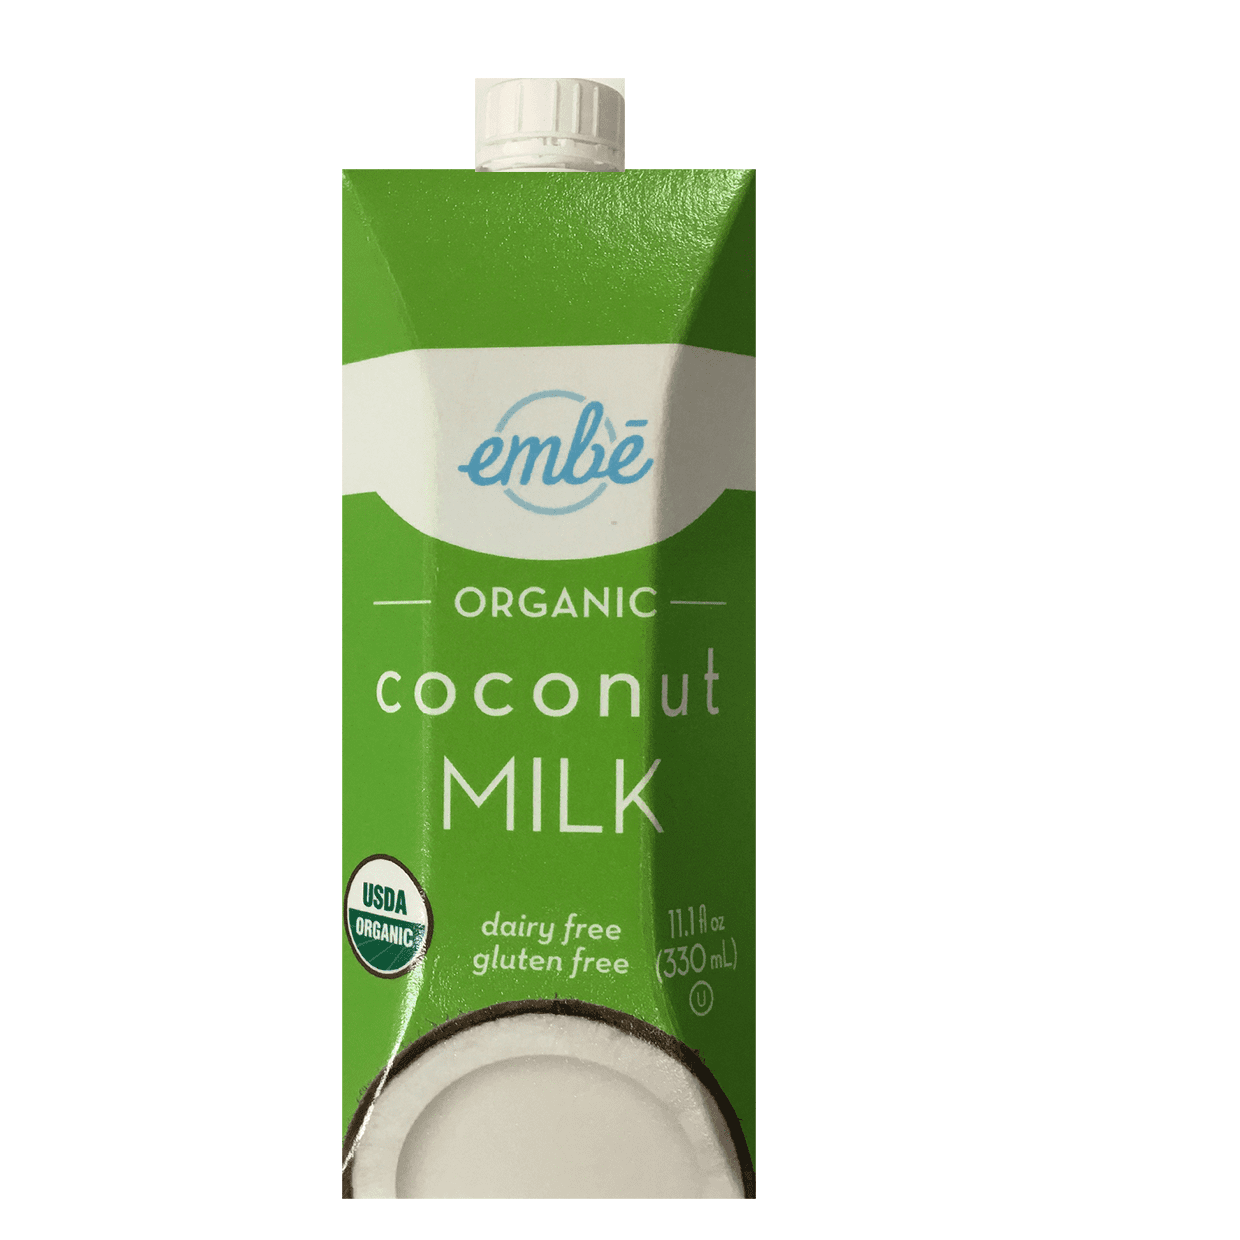 embe Organic Coconut Milk | Dairy-free